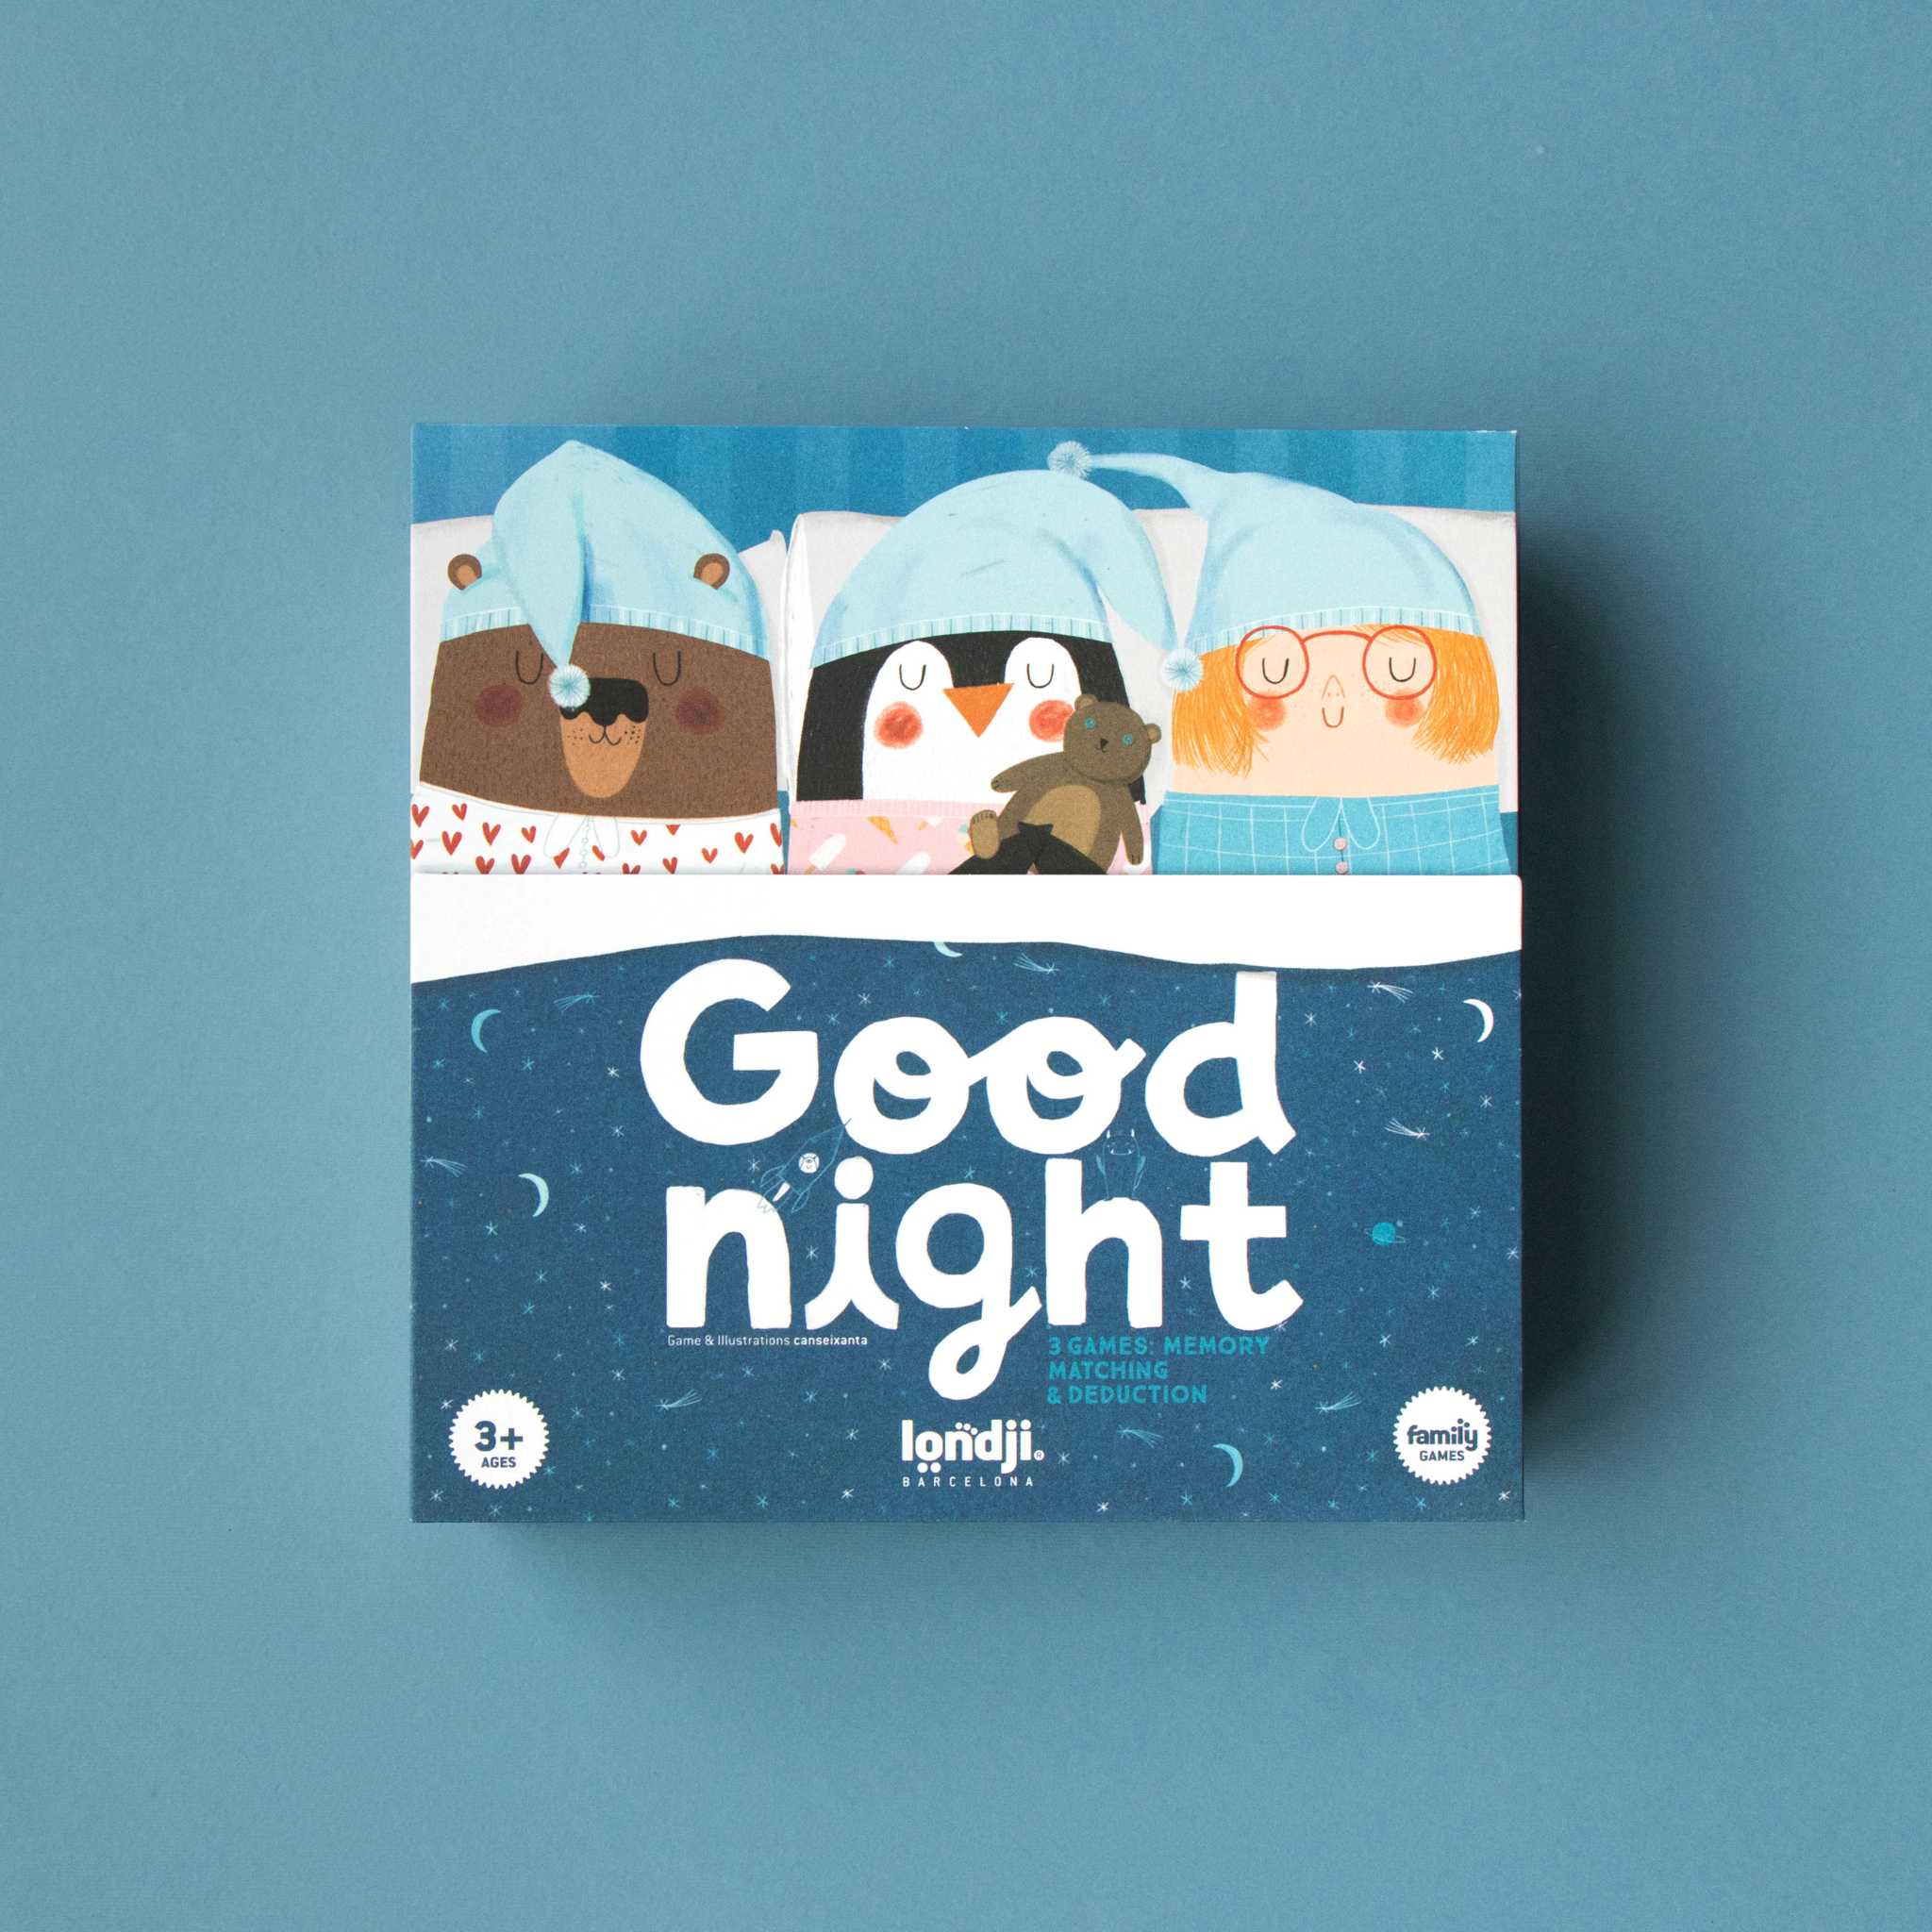 Londji Goodnight Game Front Of Box